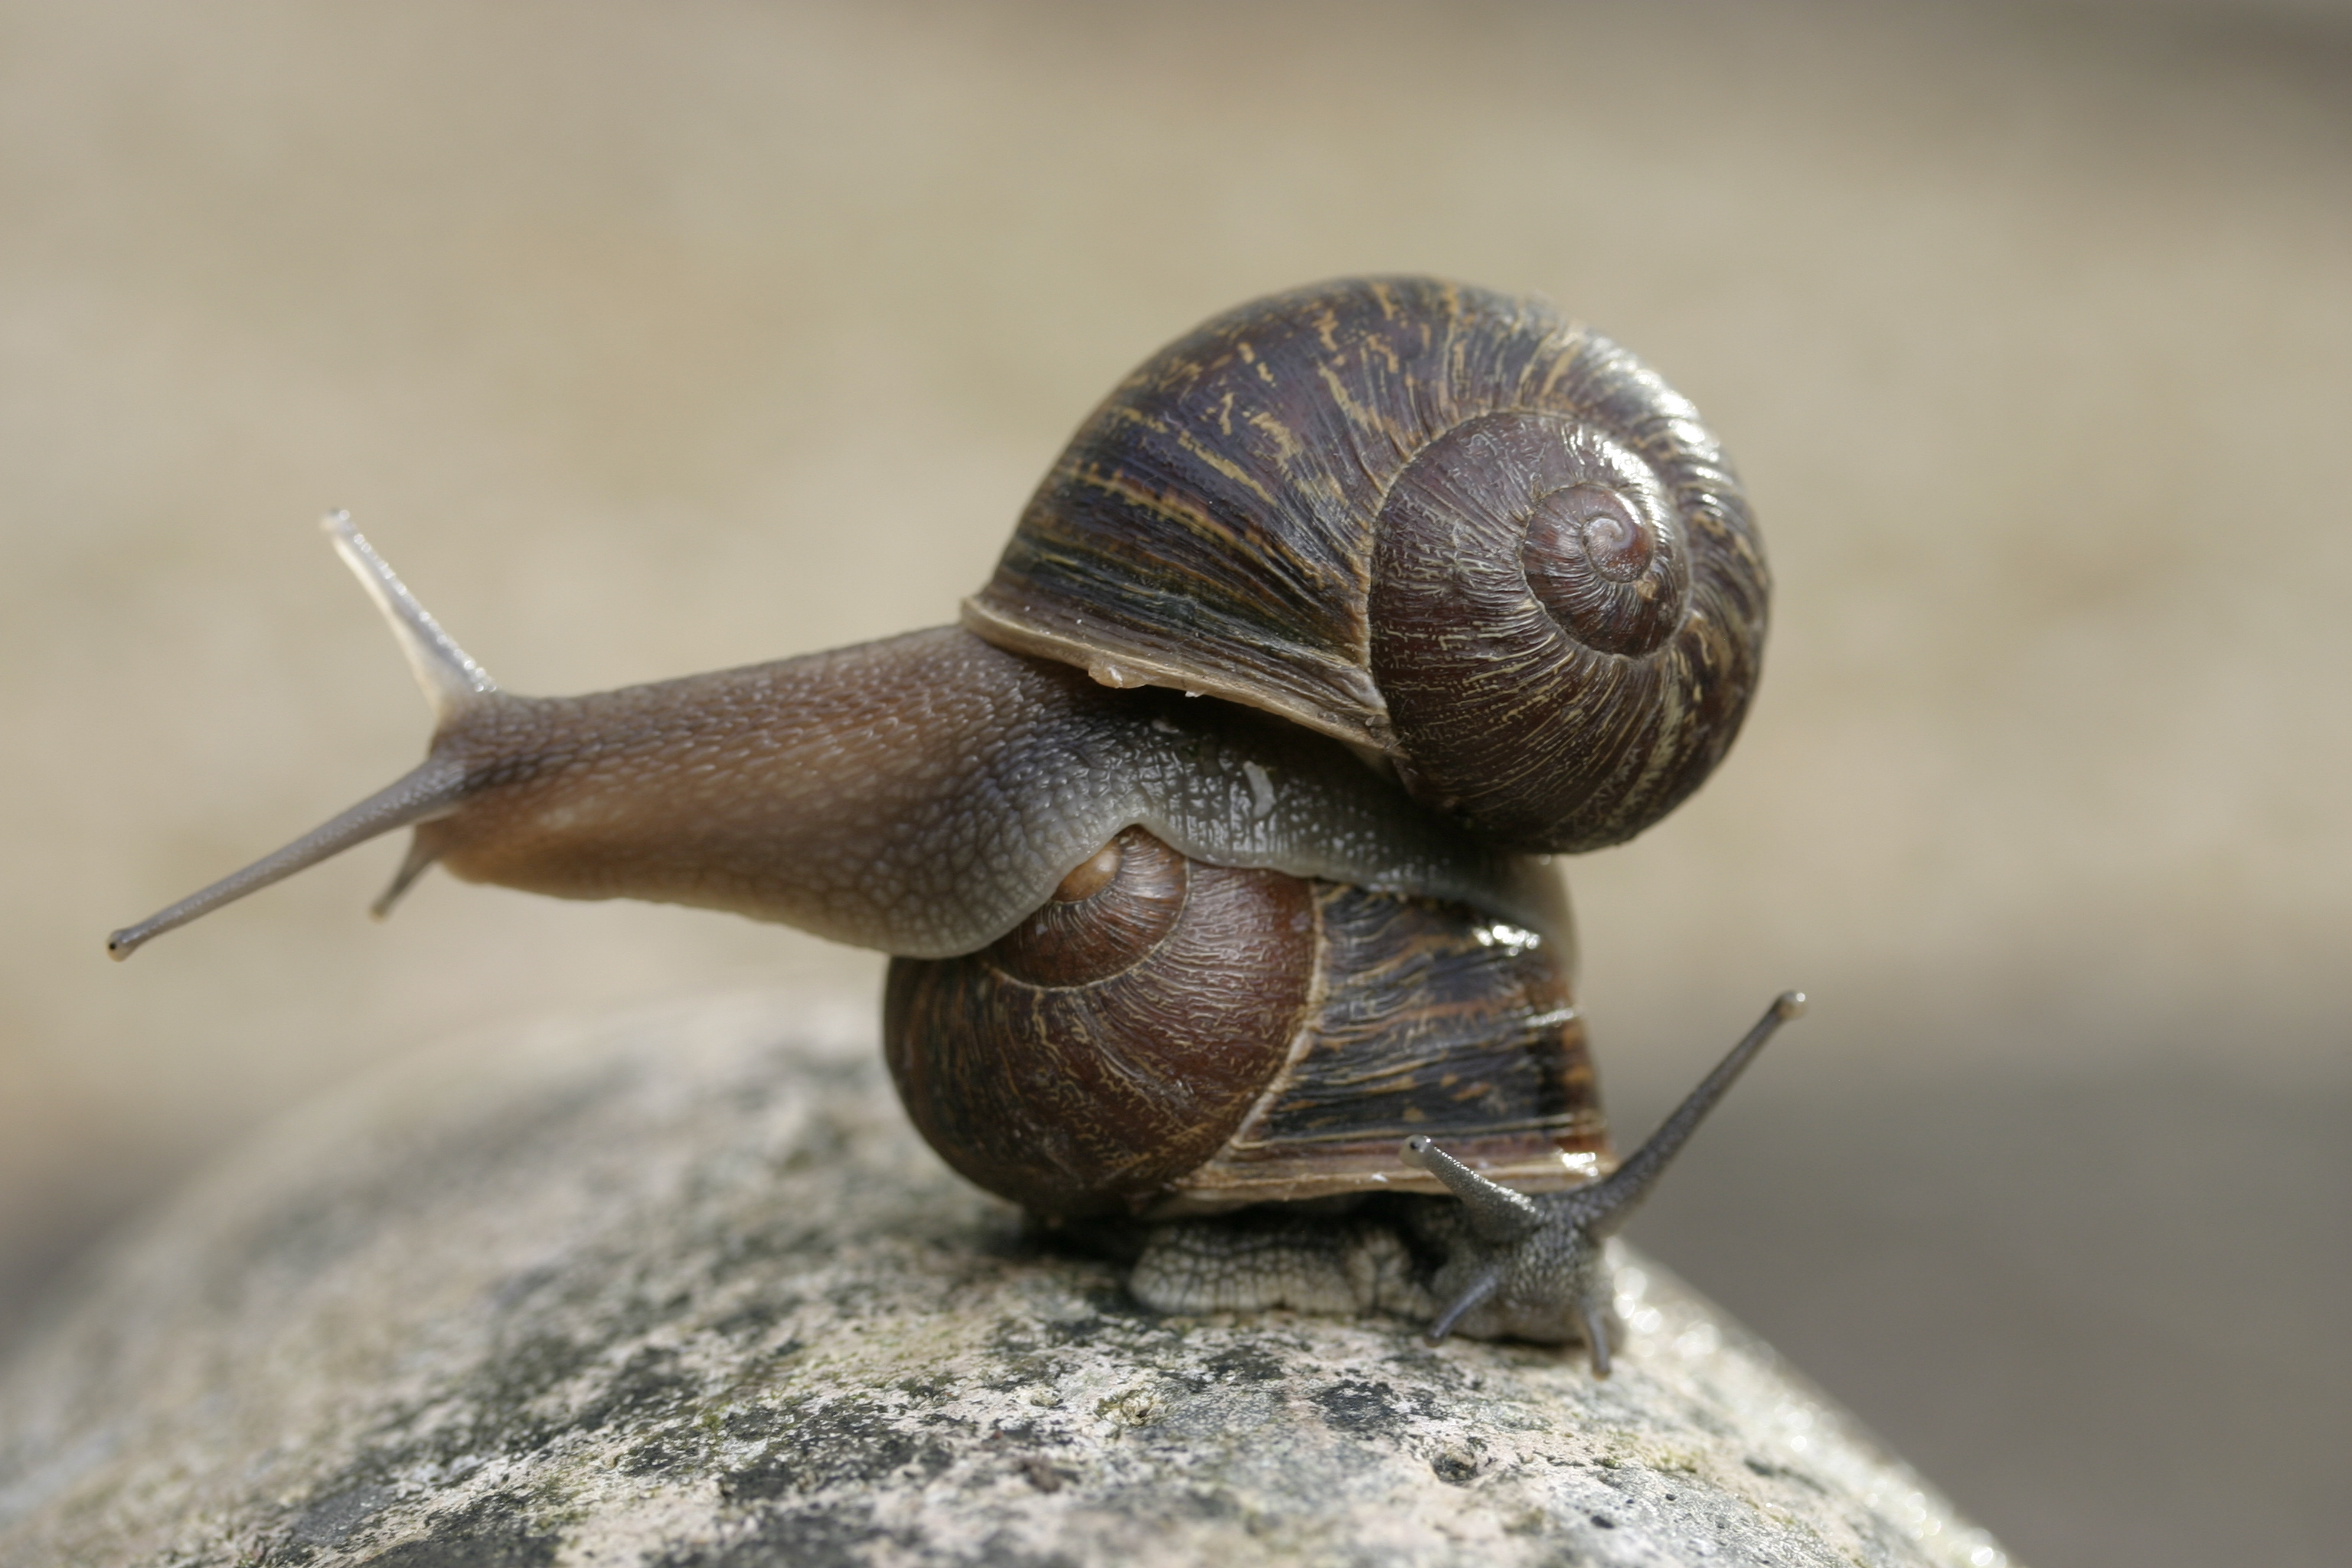 sinistral Jeremy garden snail on top of dextral. Credit: Angus Davison, University of Nottingham